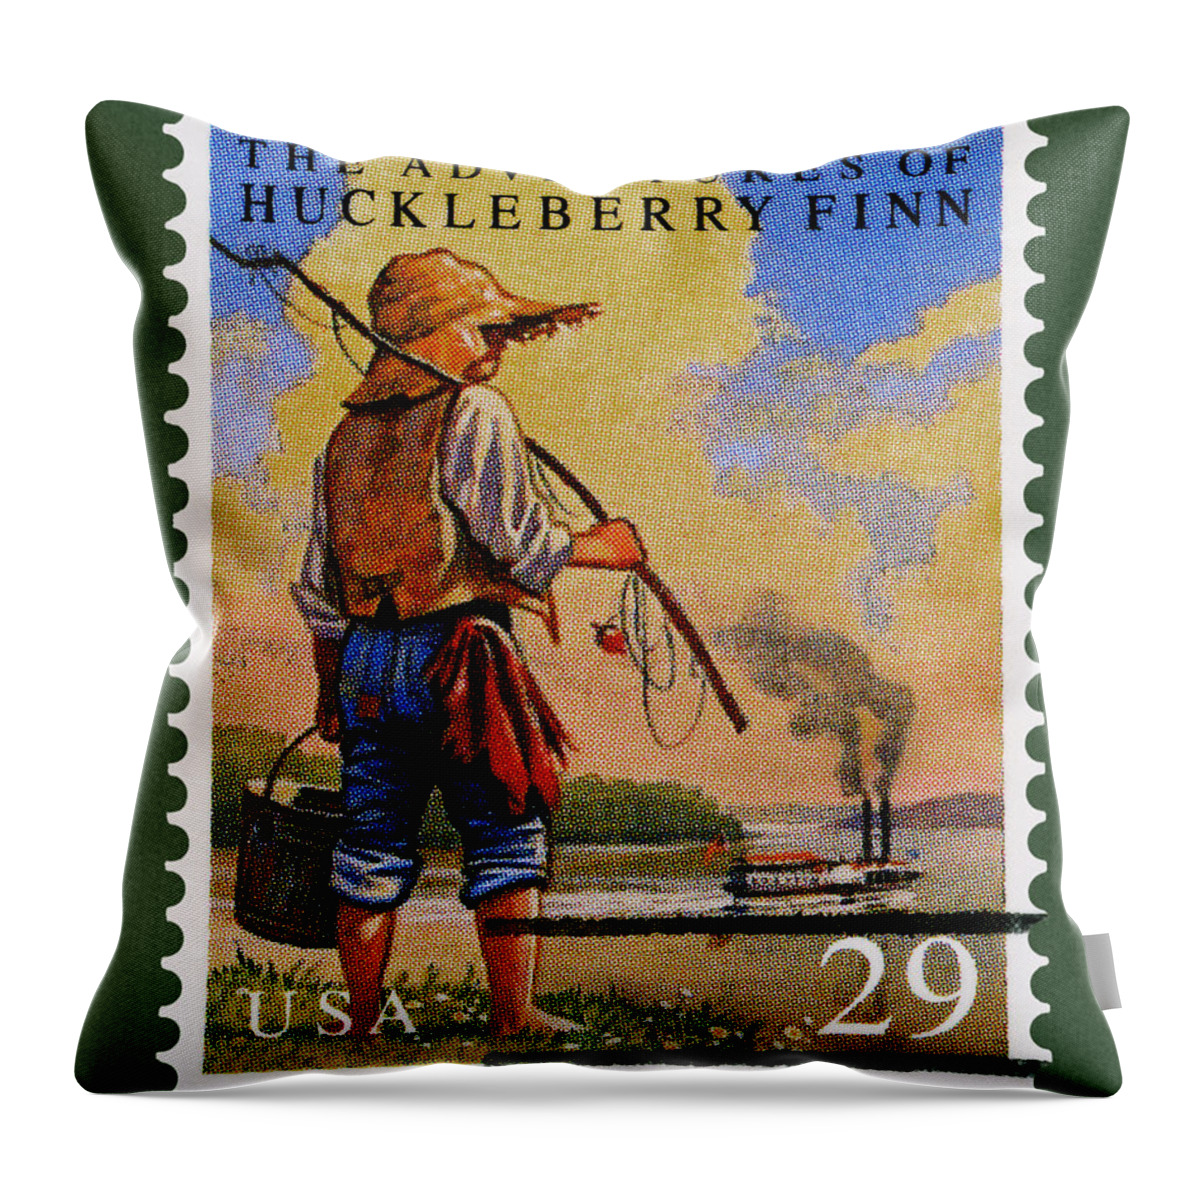 Huckleberry Finn Throw Pillow featuring the photograph Adventures of Huckleberry Finn Stamp by Phil Cardamone